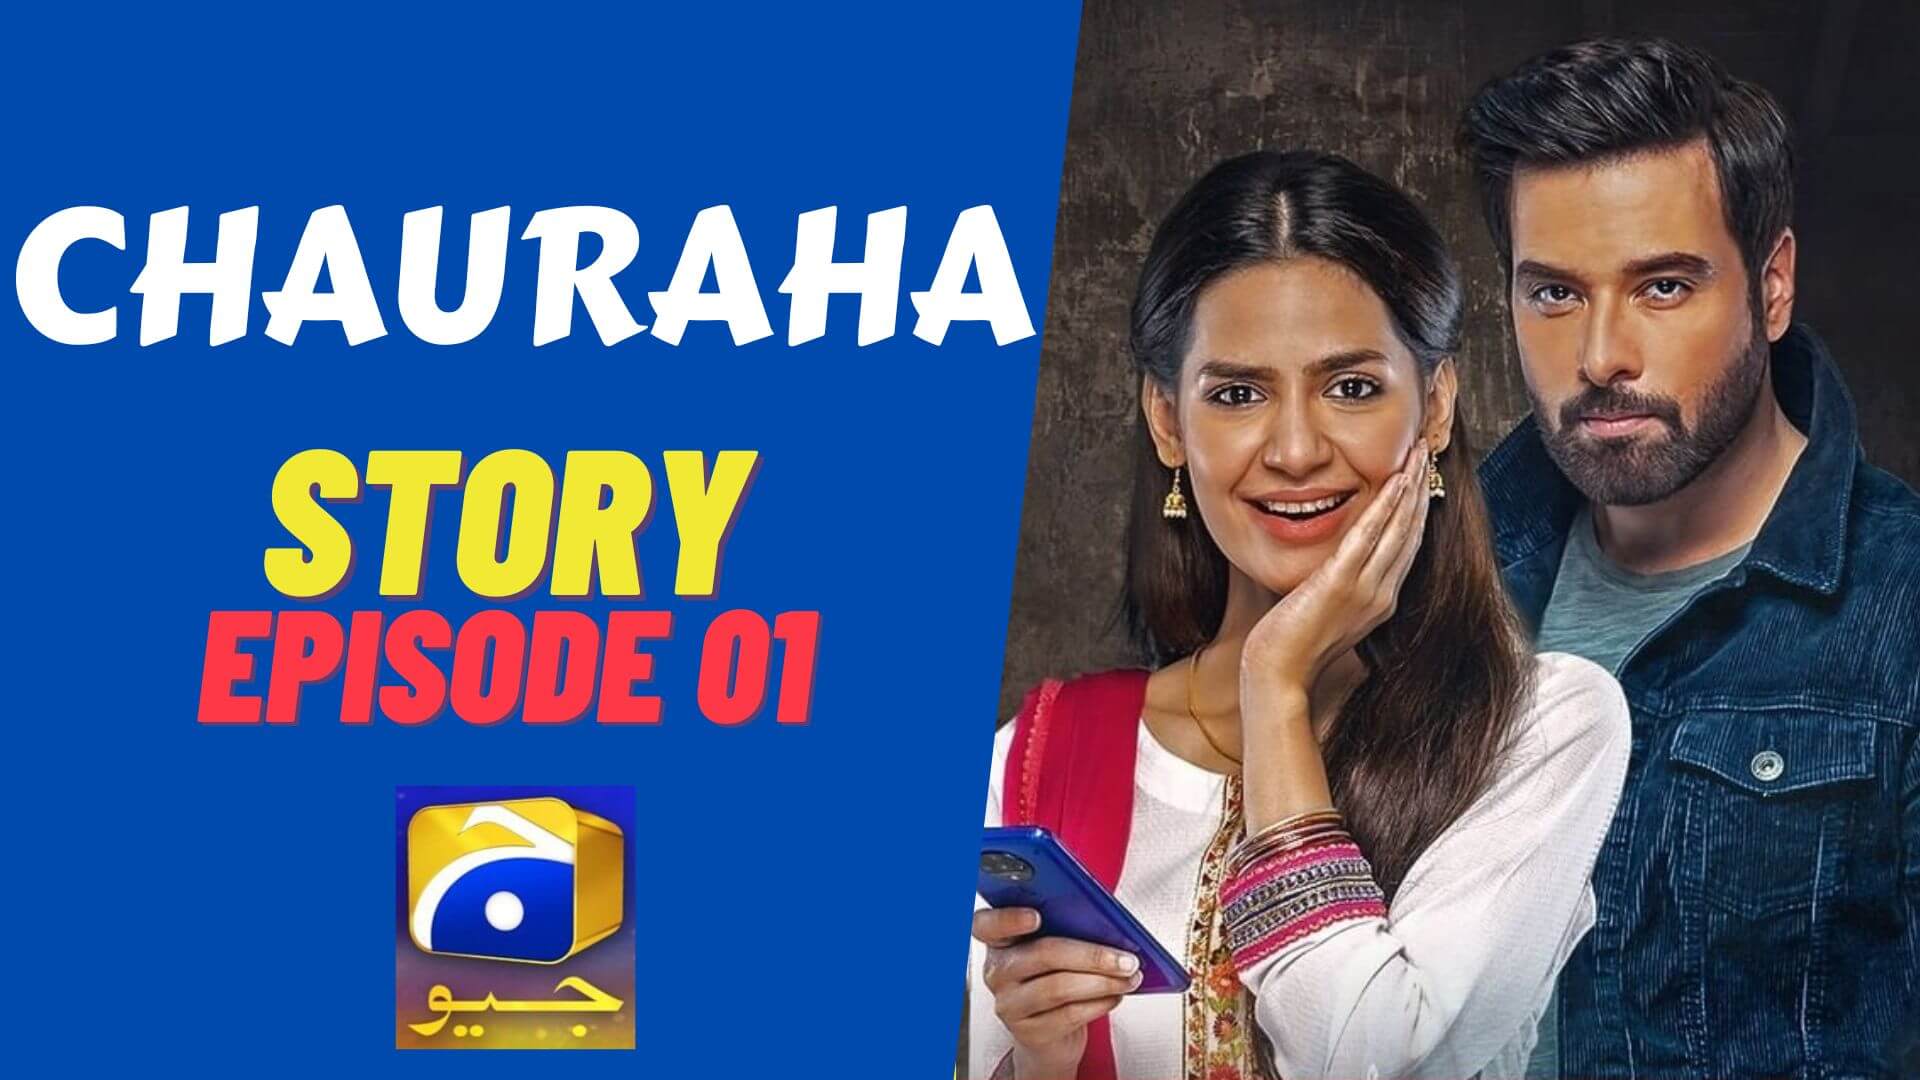 Chauraha Episode 01 Story